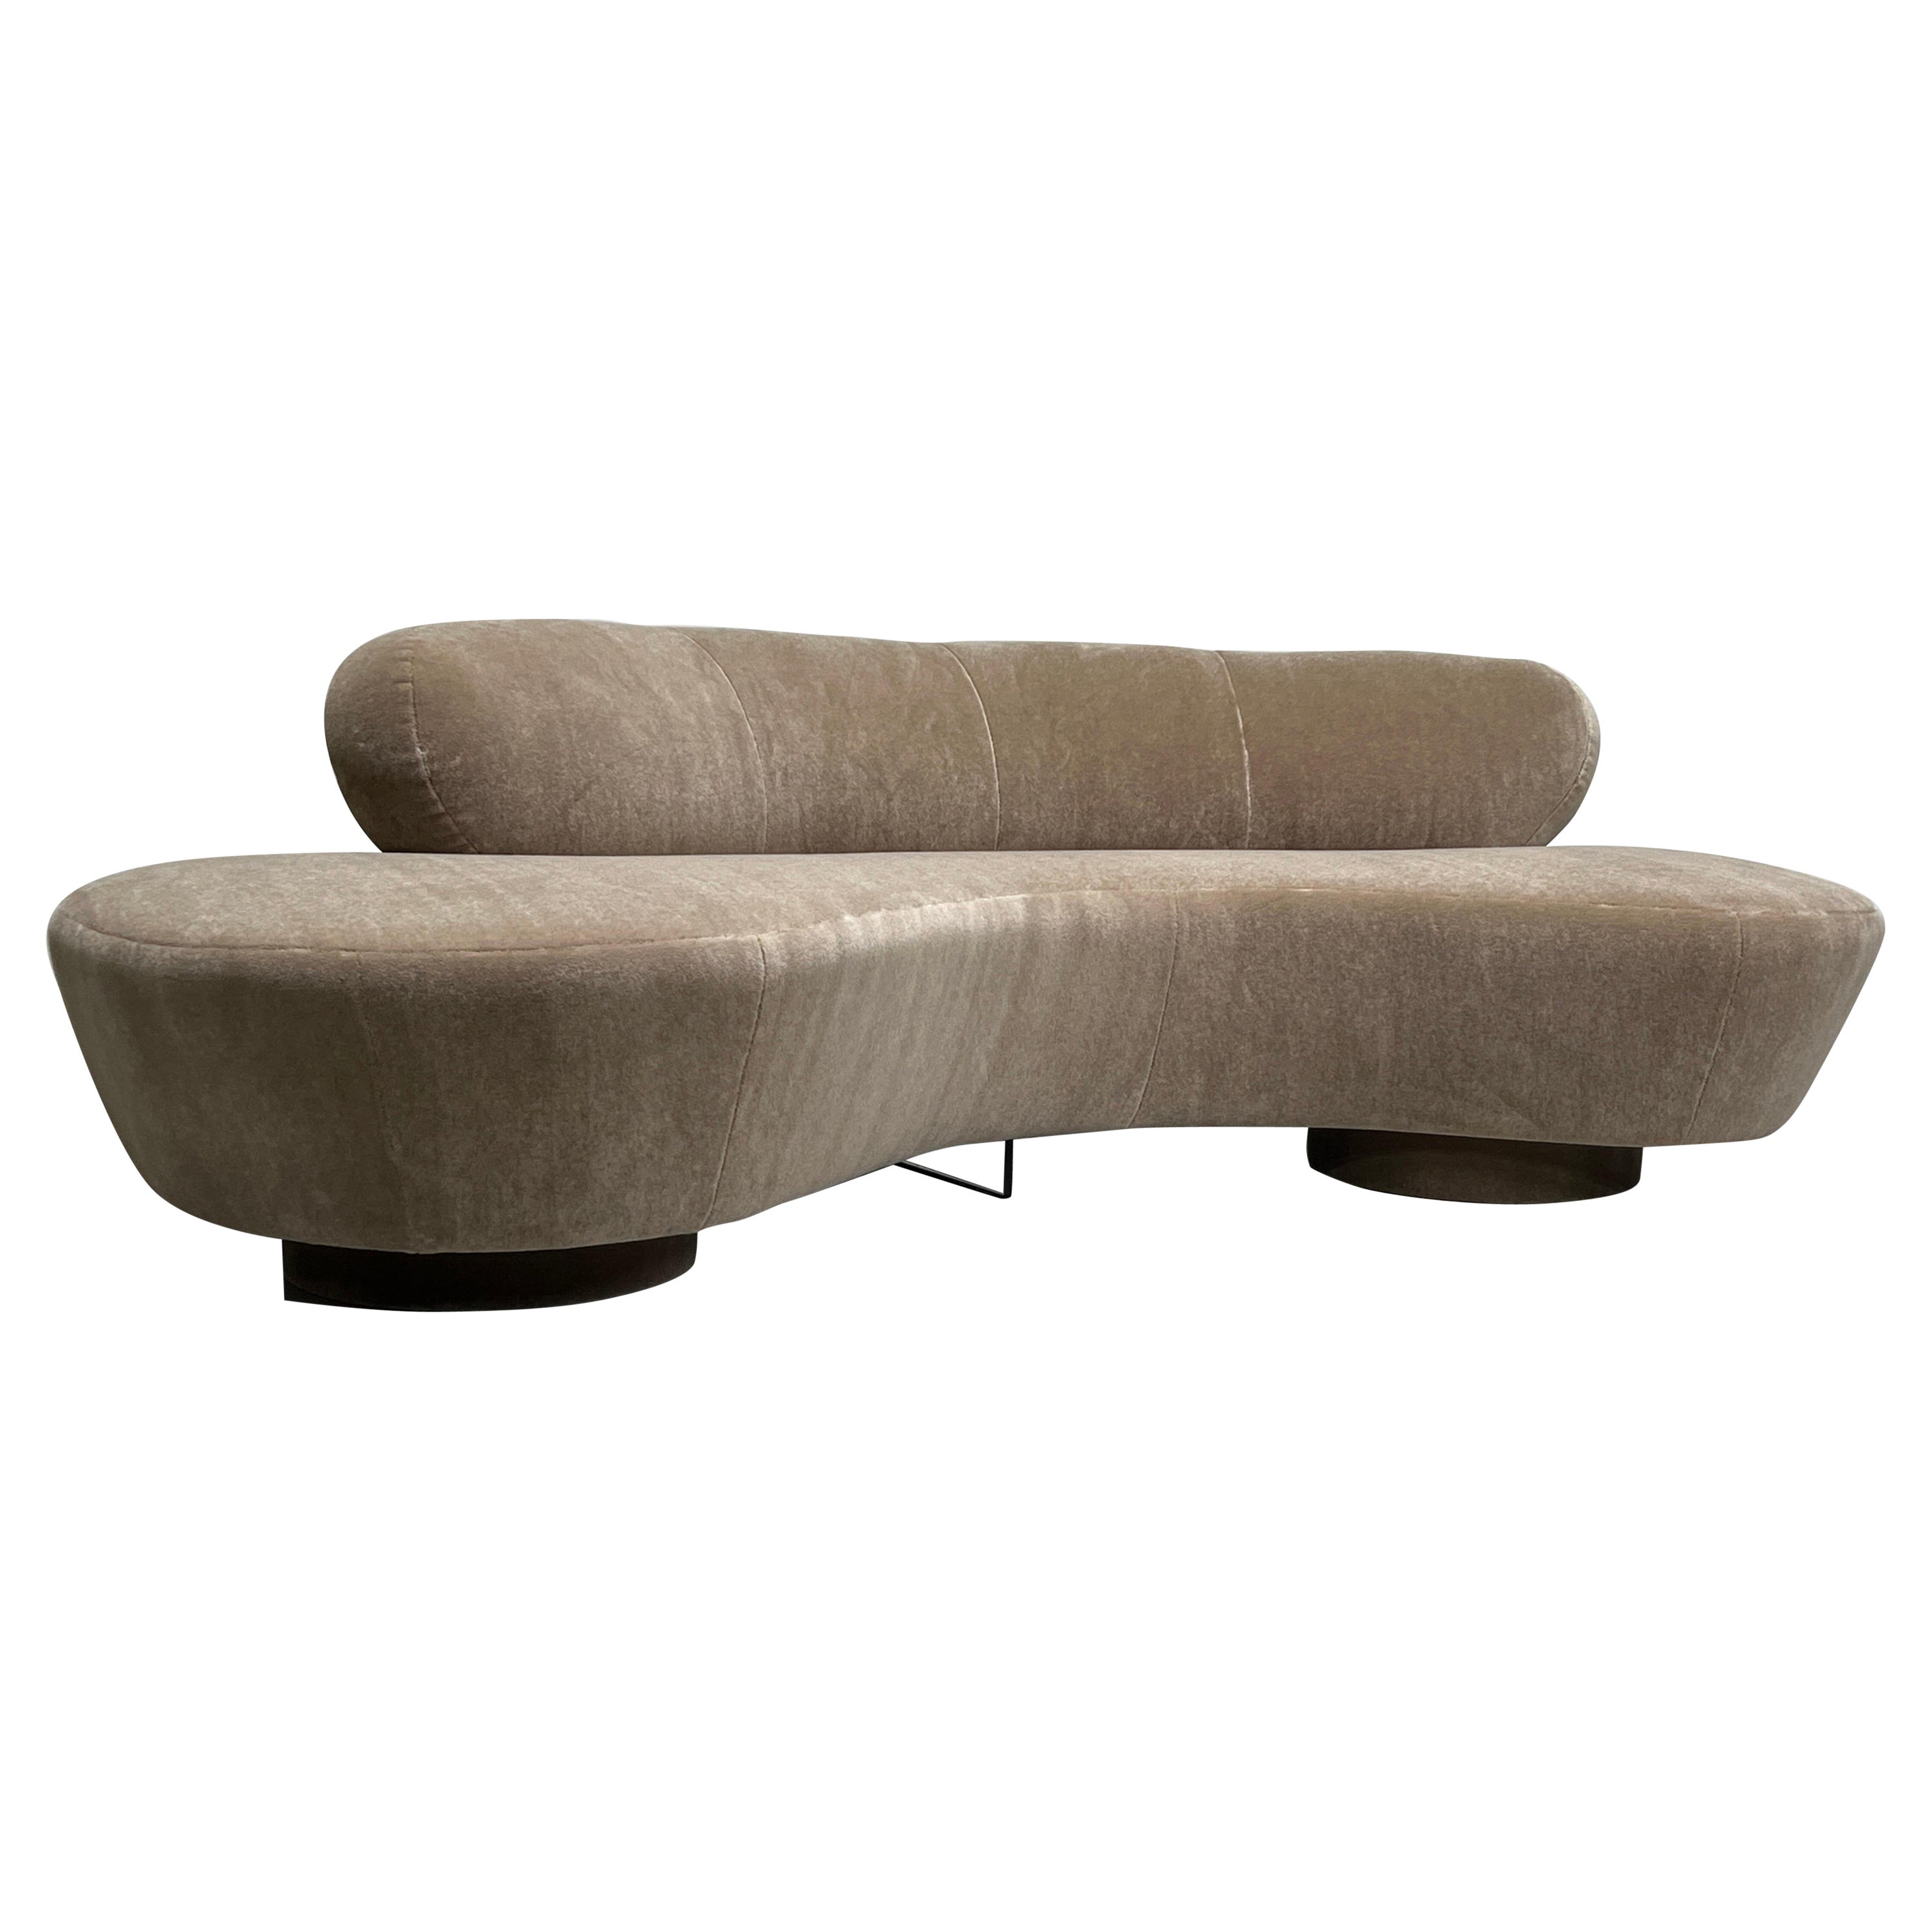 Sofa by Vladimir Kagan for Directional